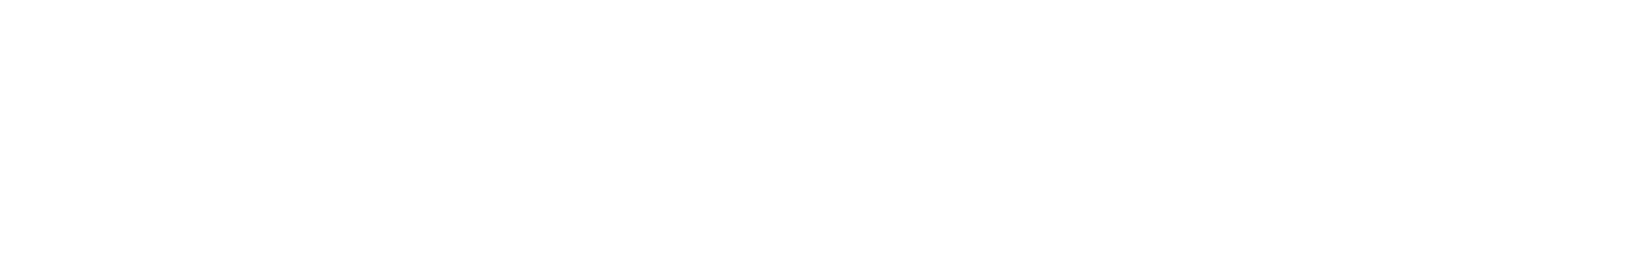 forrester-RGB-white_logo